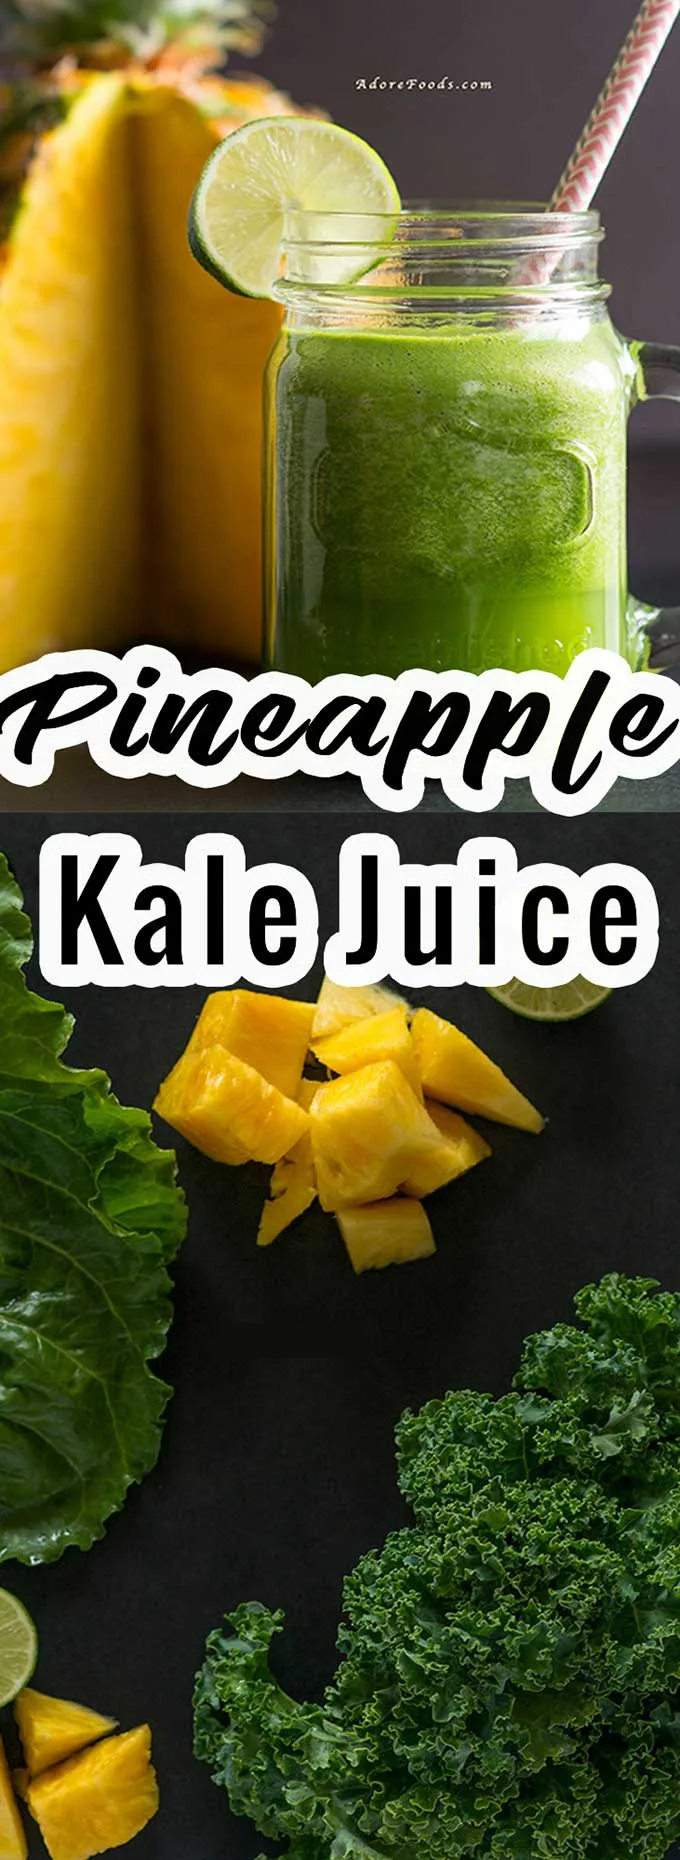 pineapple and kale fresh green juice recipe